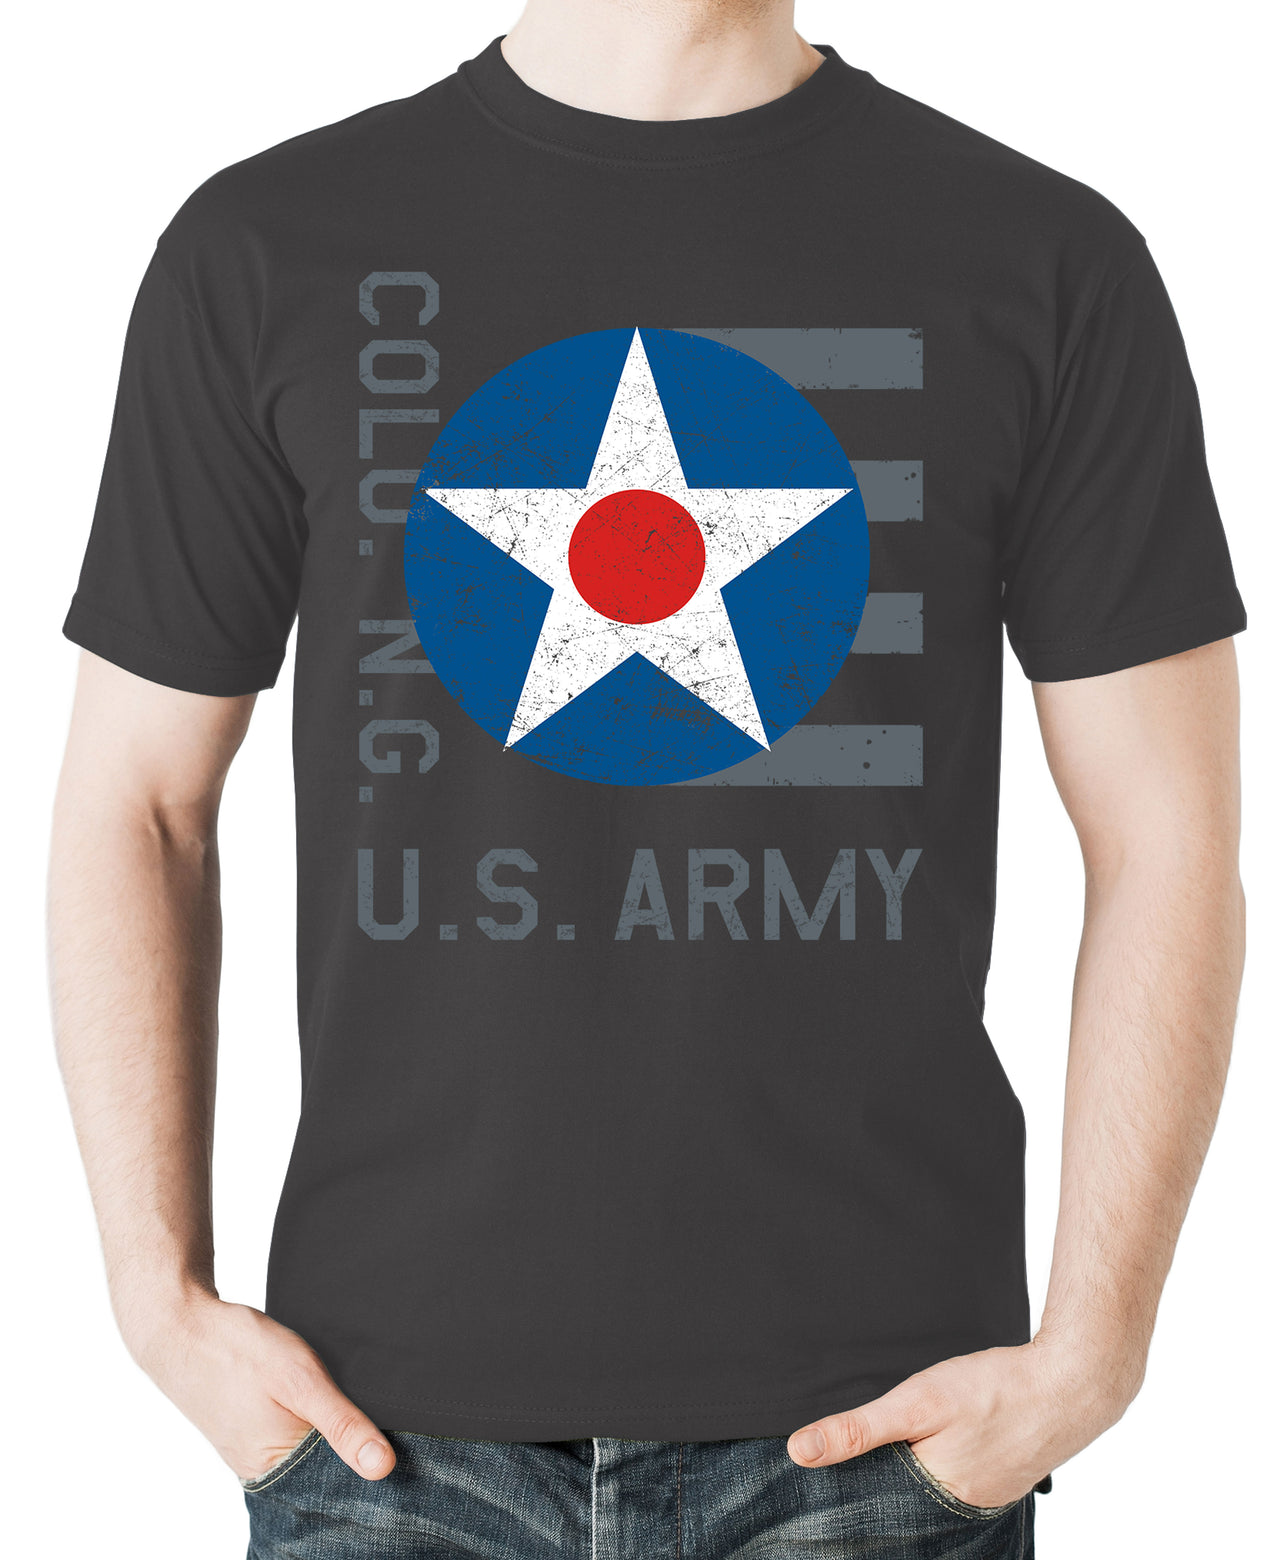 US Army Air Corps - T-shirt